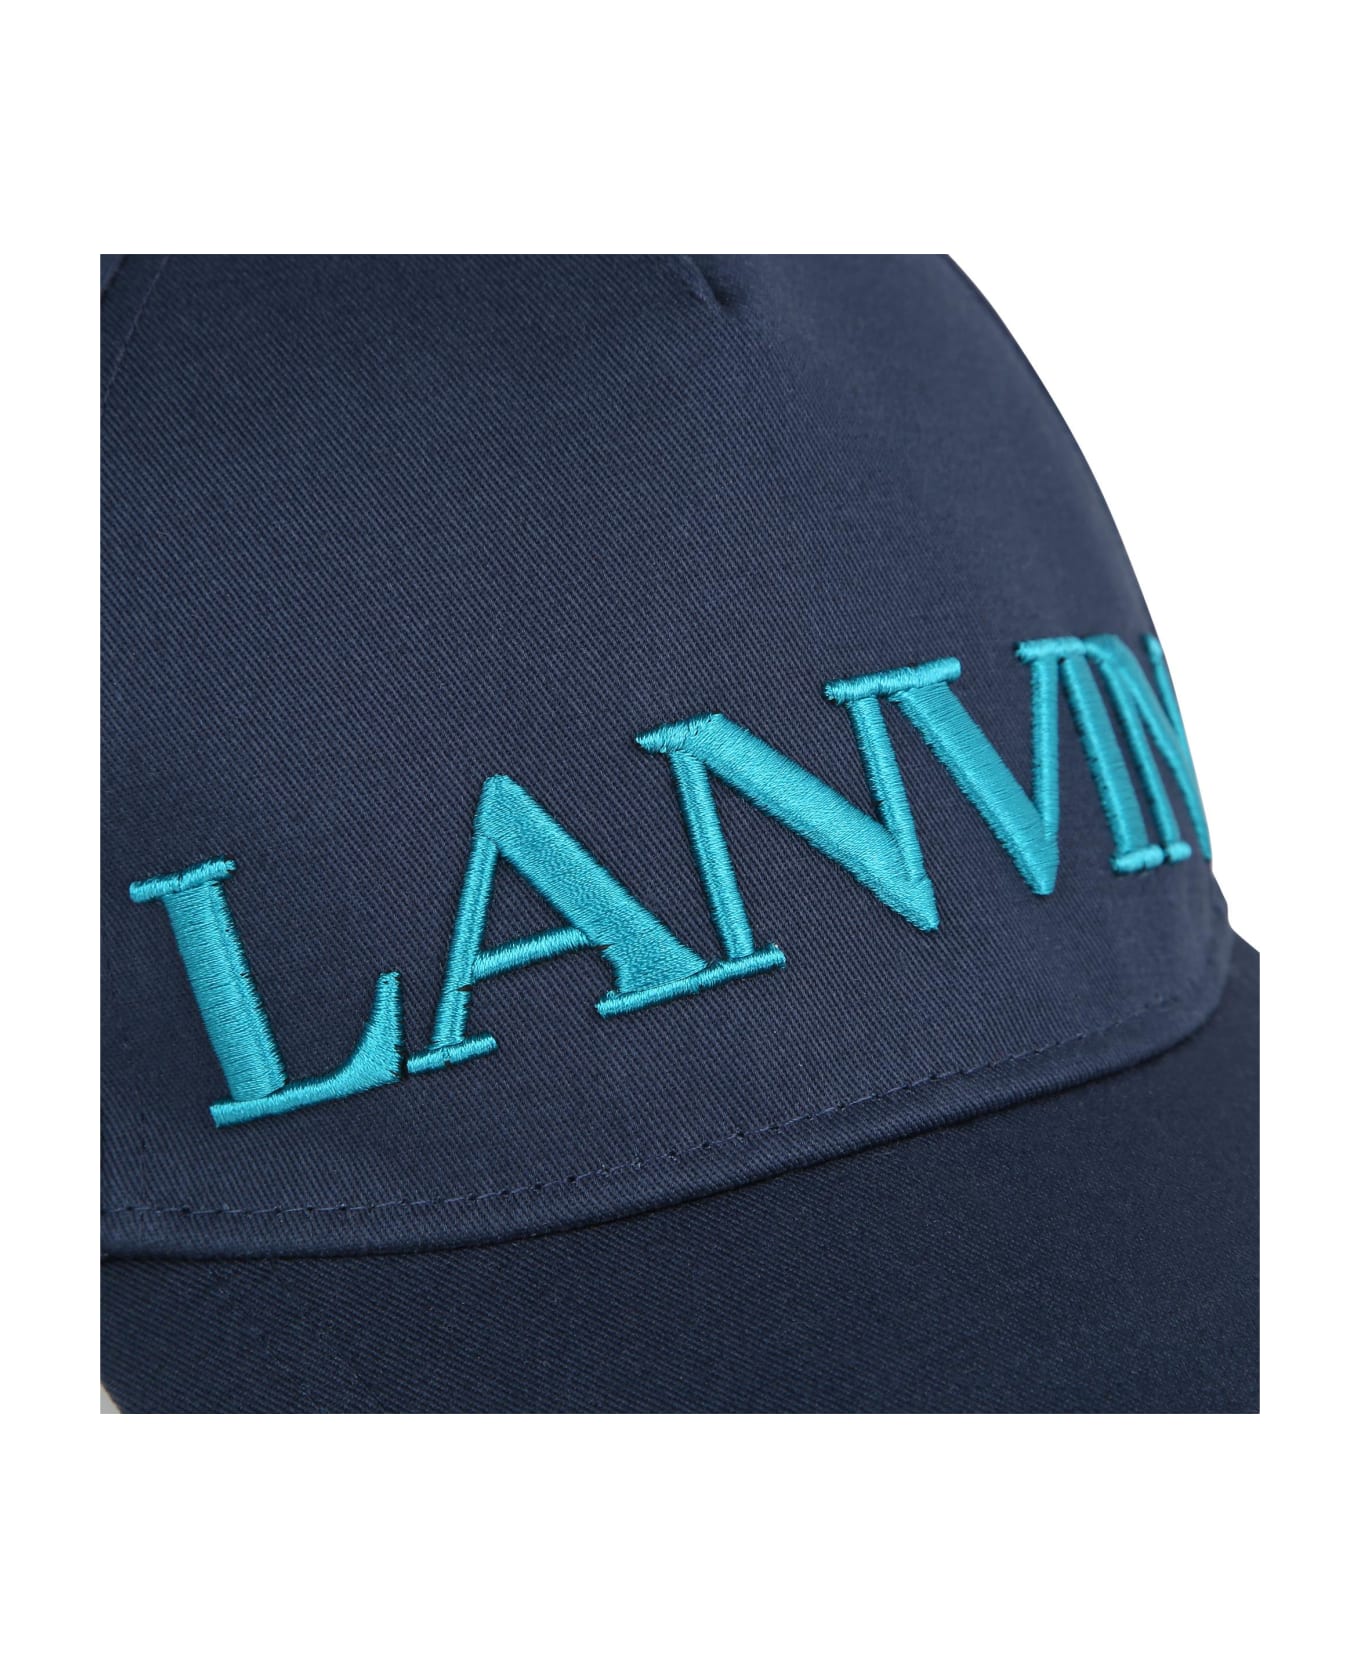 Lanvin Cappello Con Logo - Blu アクセサリー＆ギフト